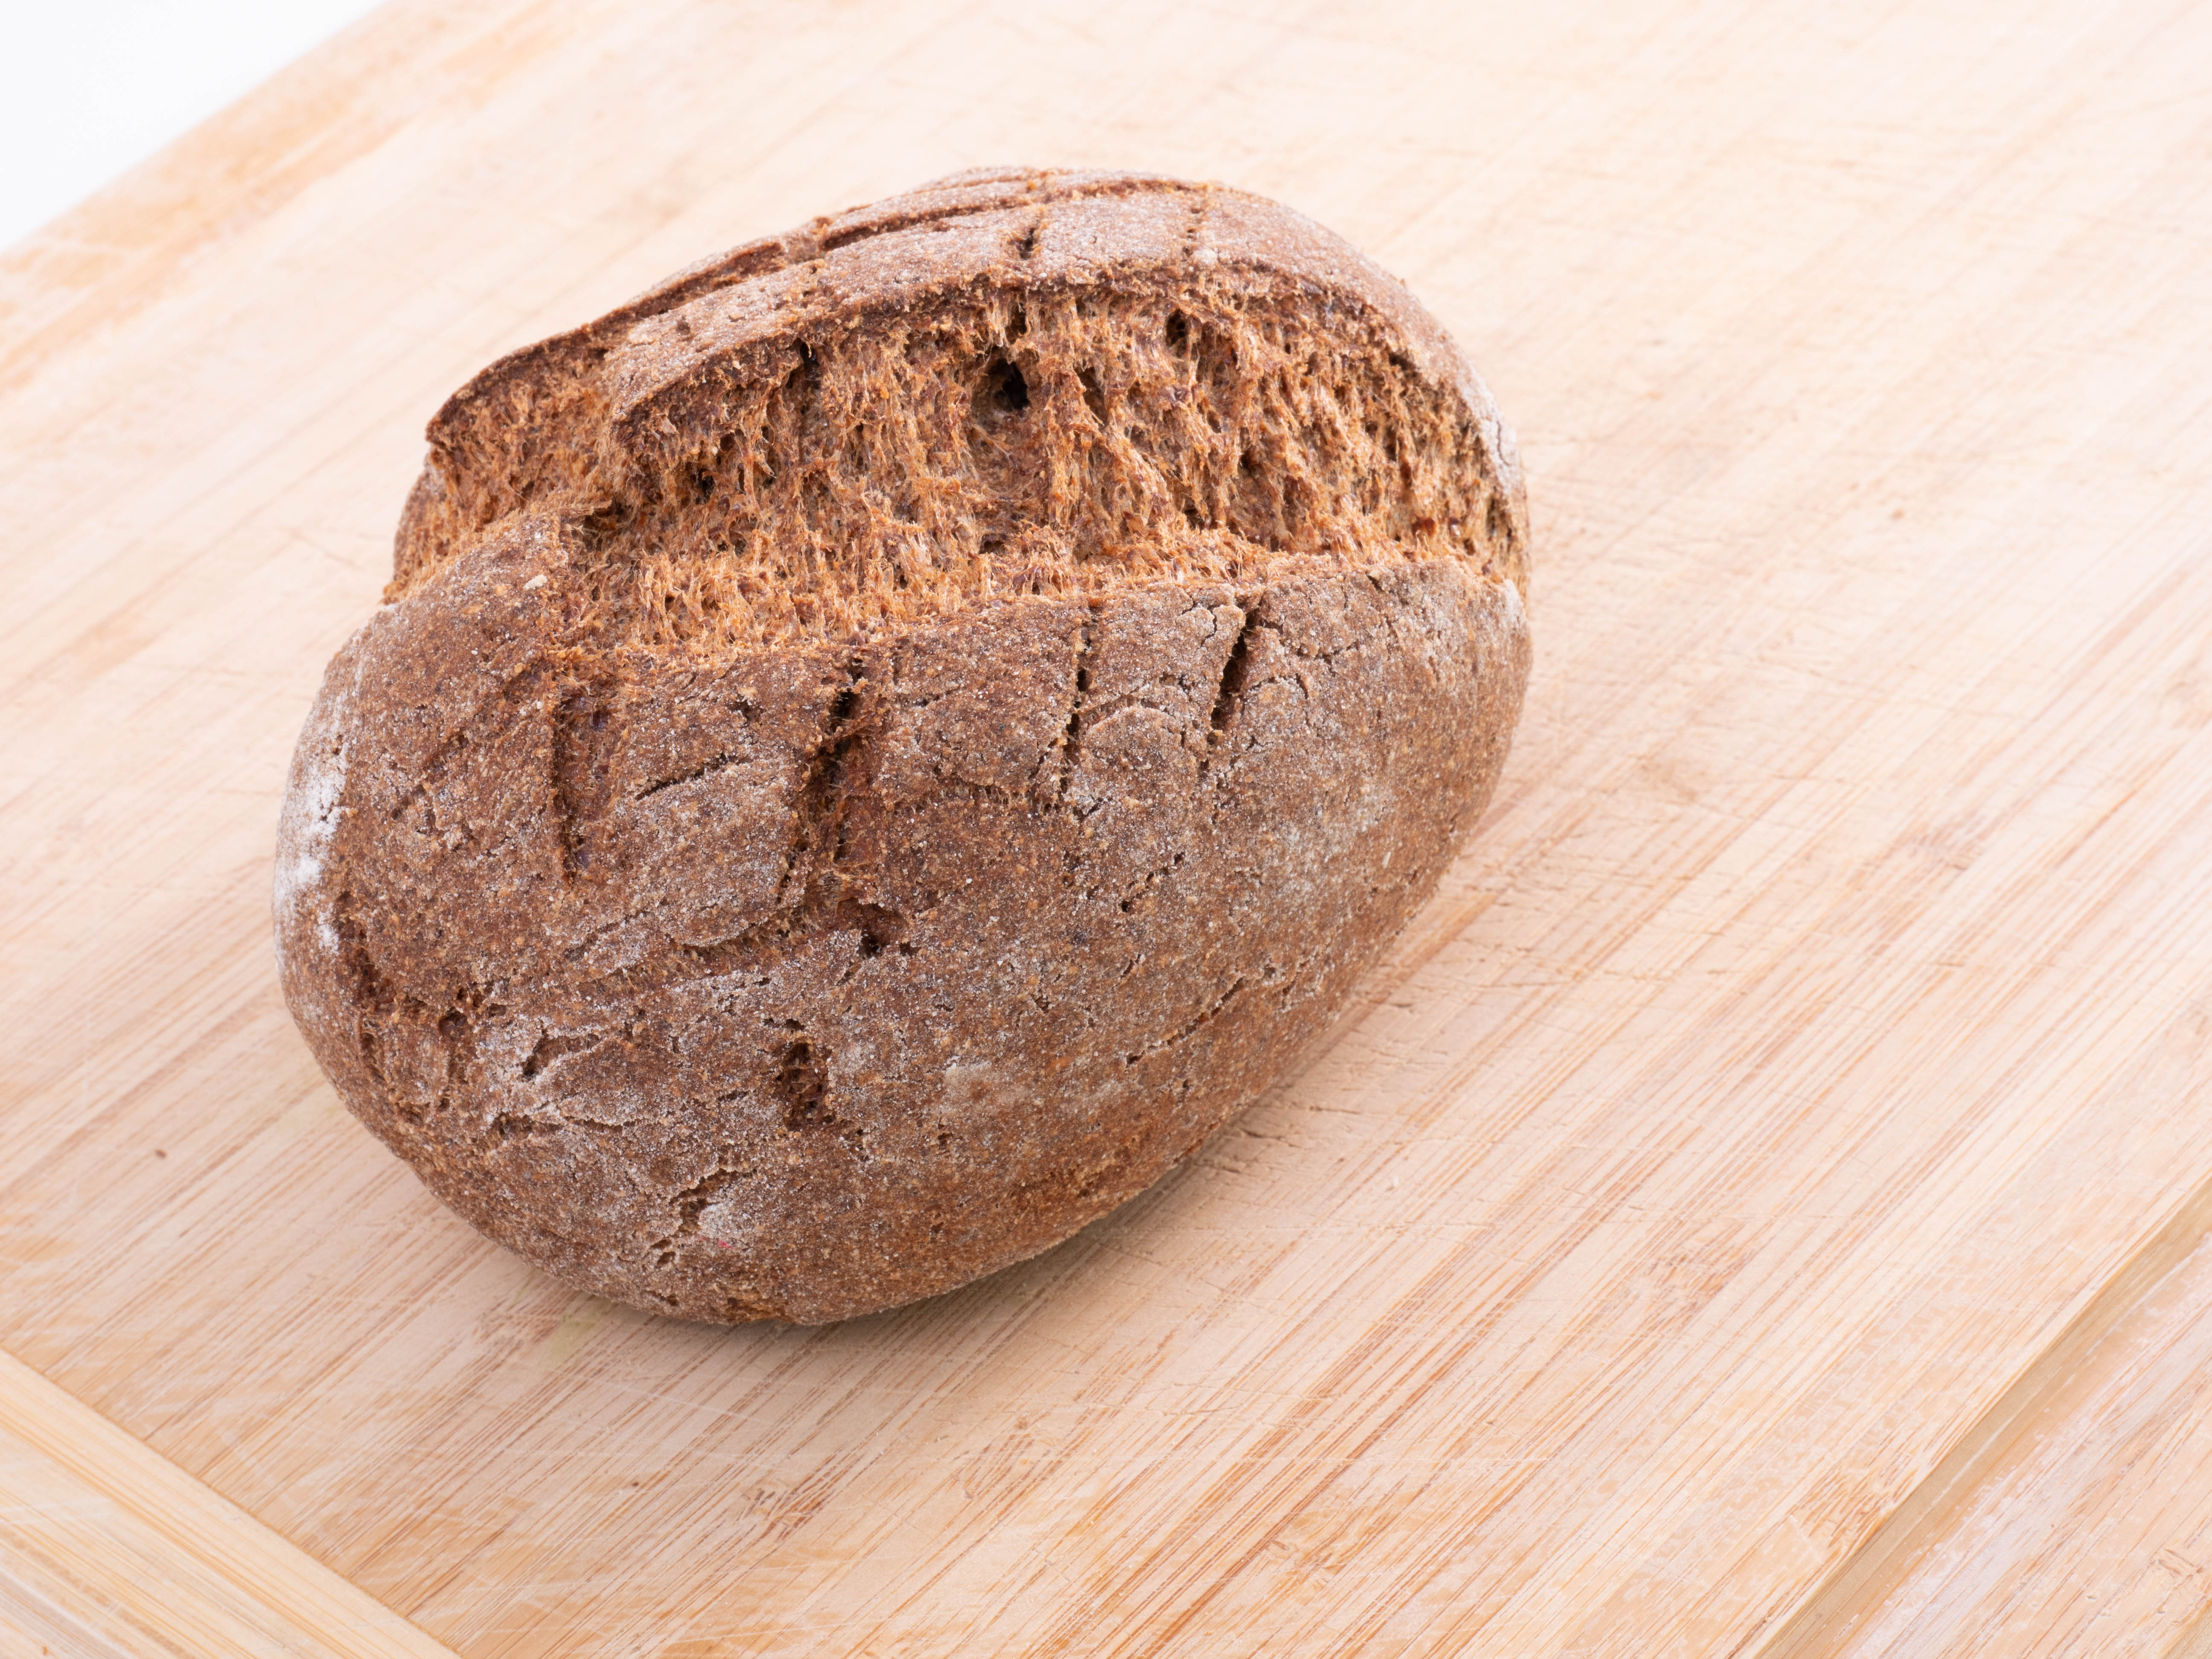 Das Rustikale Brot mit weniger Kohlenhydraten